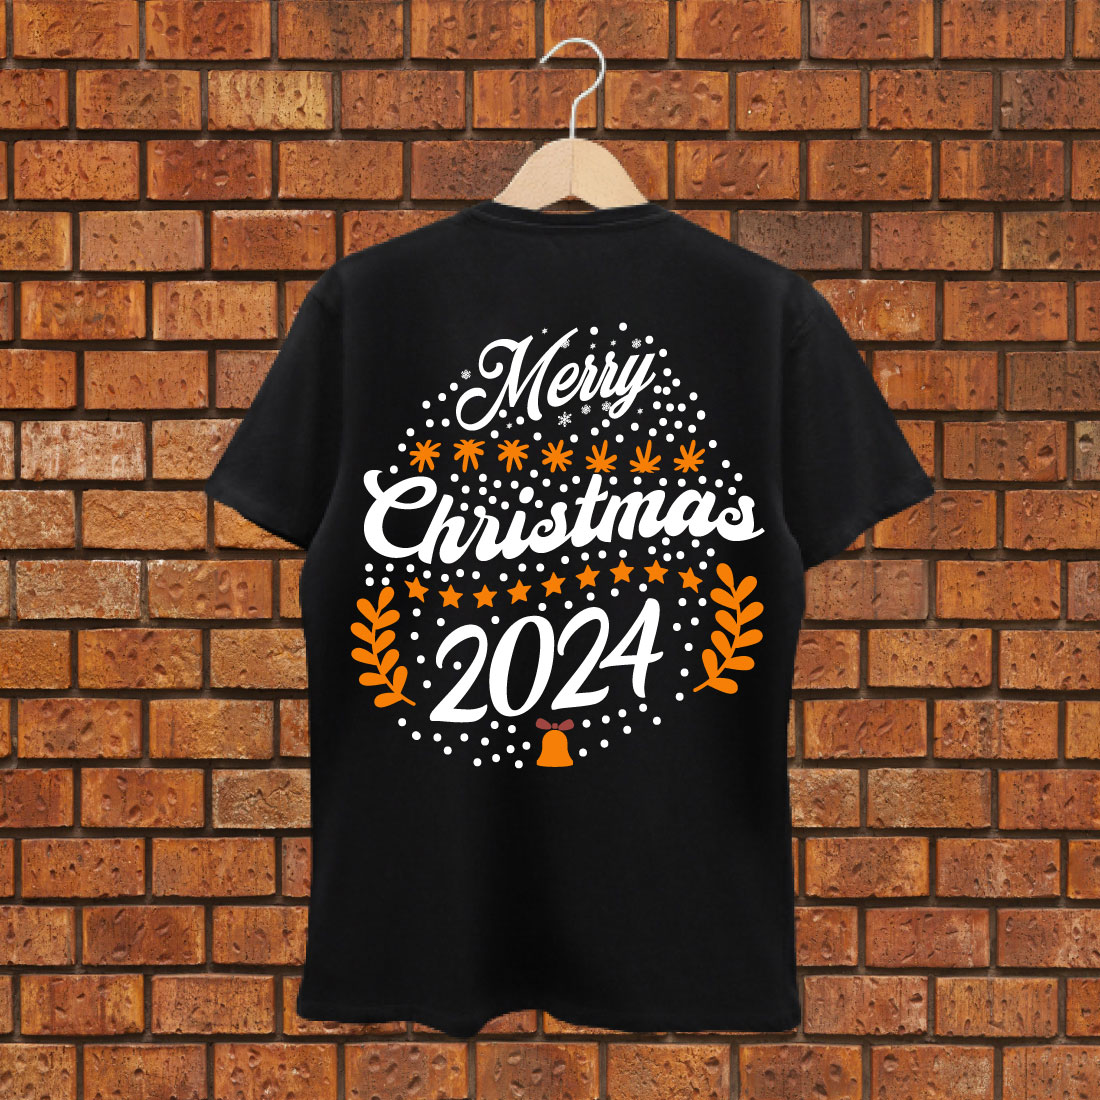 Merry Christmas T-Shirt Design cover image.